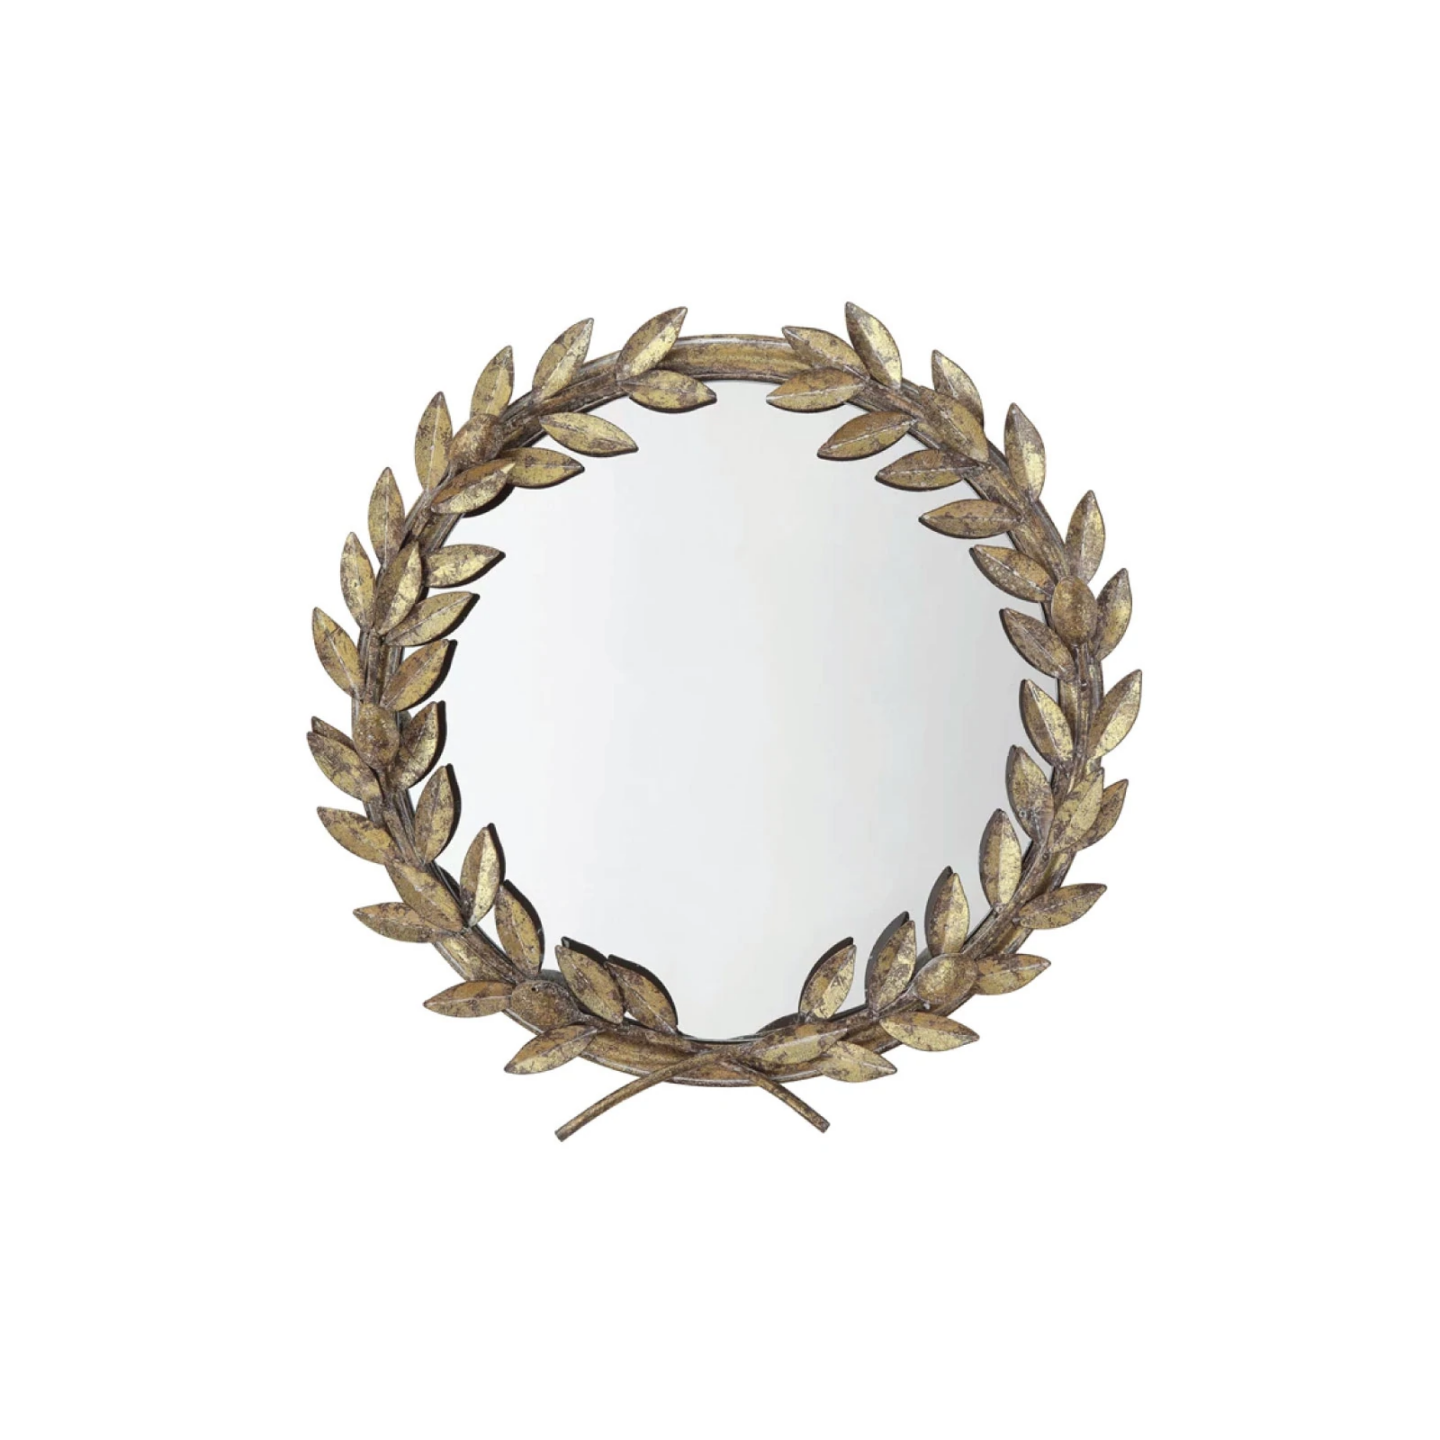 Round antique laurel wreath mirror